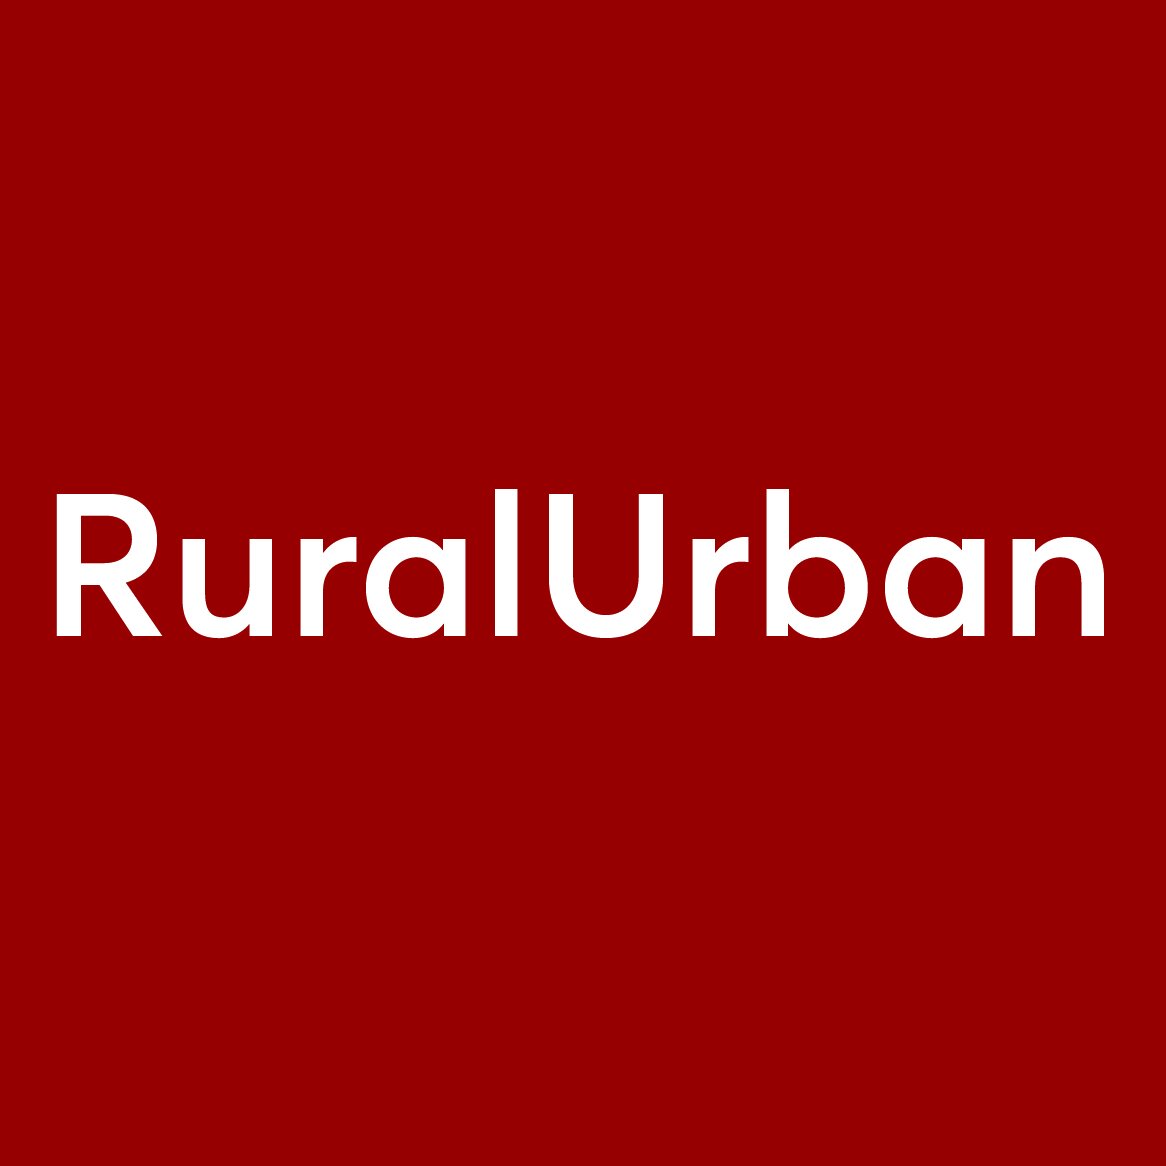 RuralUrban